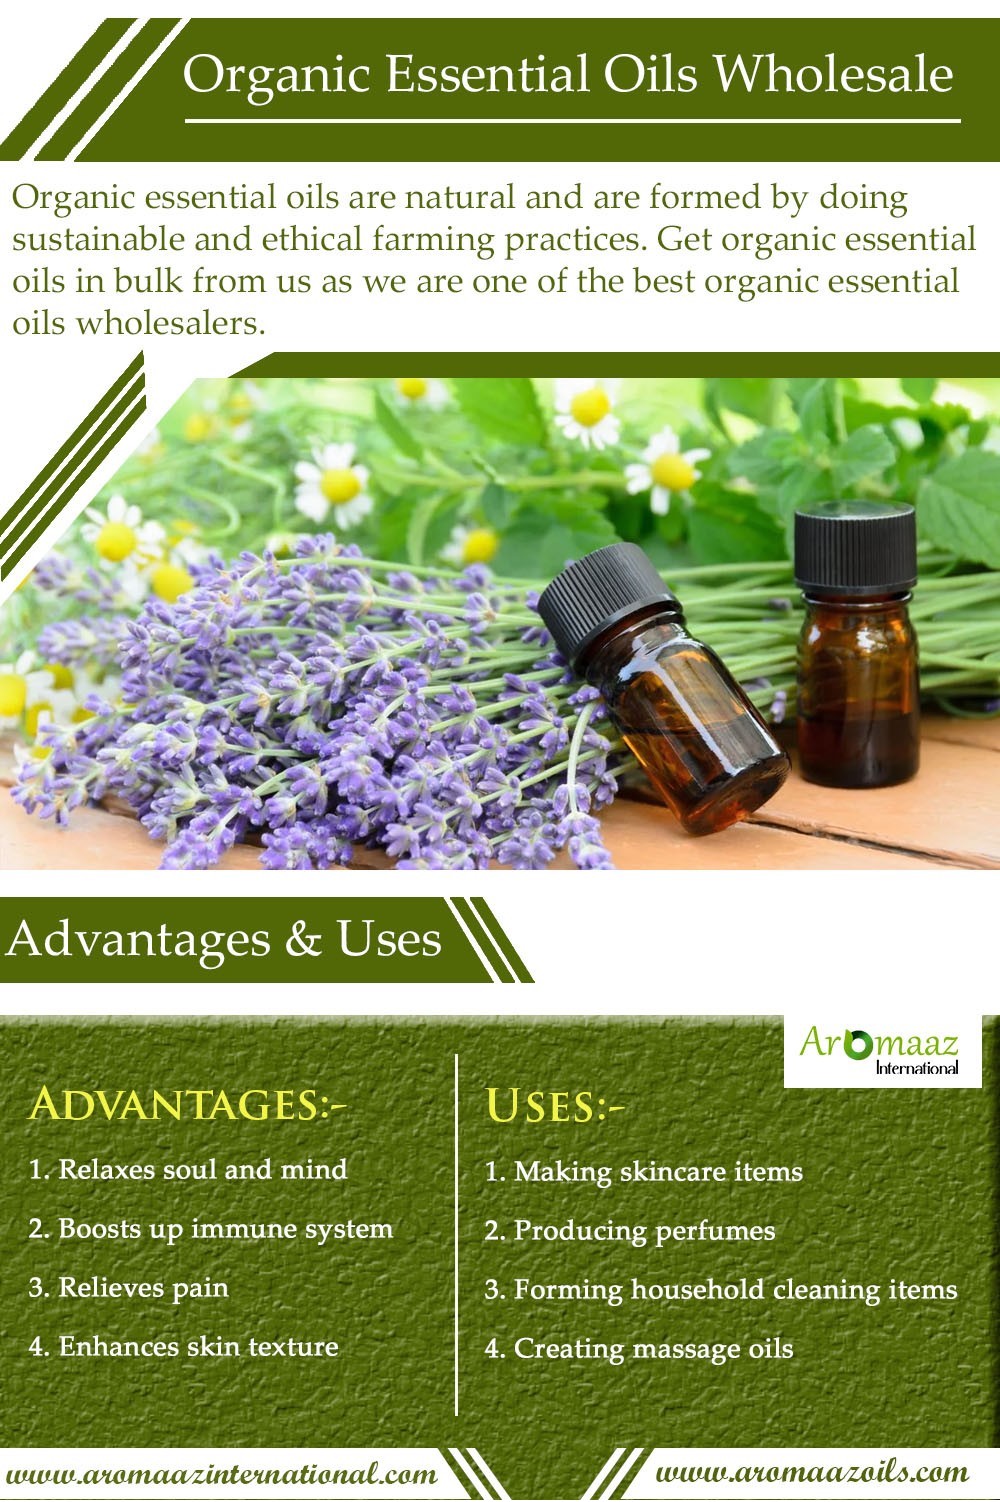 Organic Essential Oils Wholesale – Aromaazoils